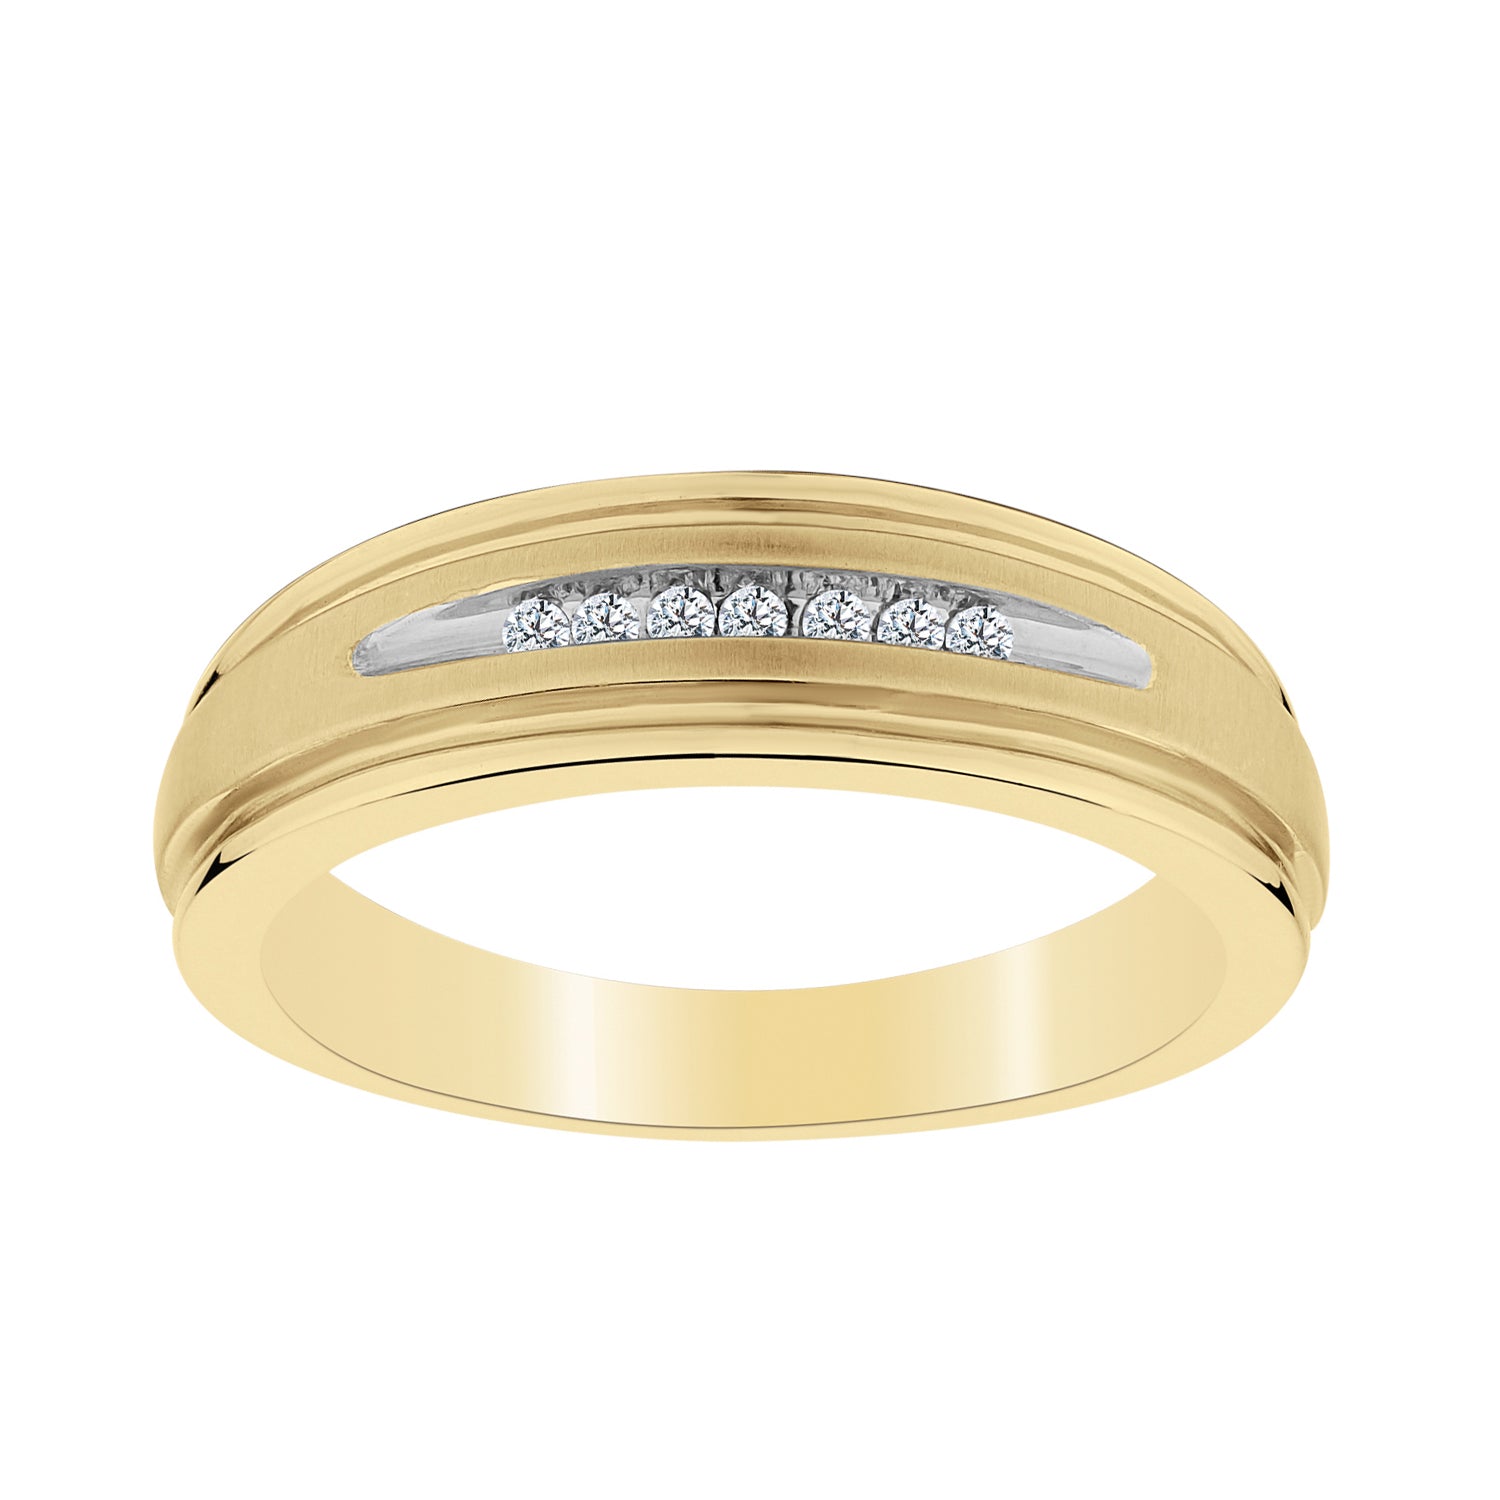 .10 Carat Diamond Gentleman's Ring,  10kt Yellow Gold. Men’s Rings. Griffin Jewellery Designs. 